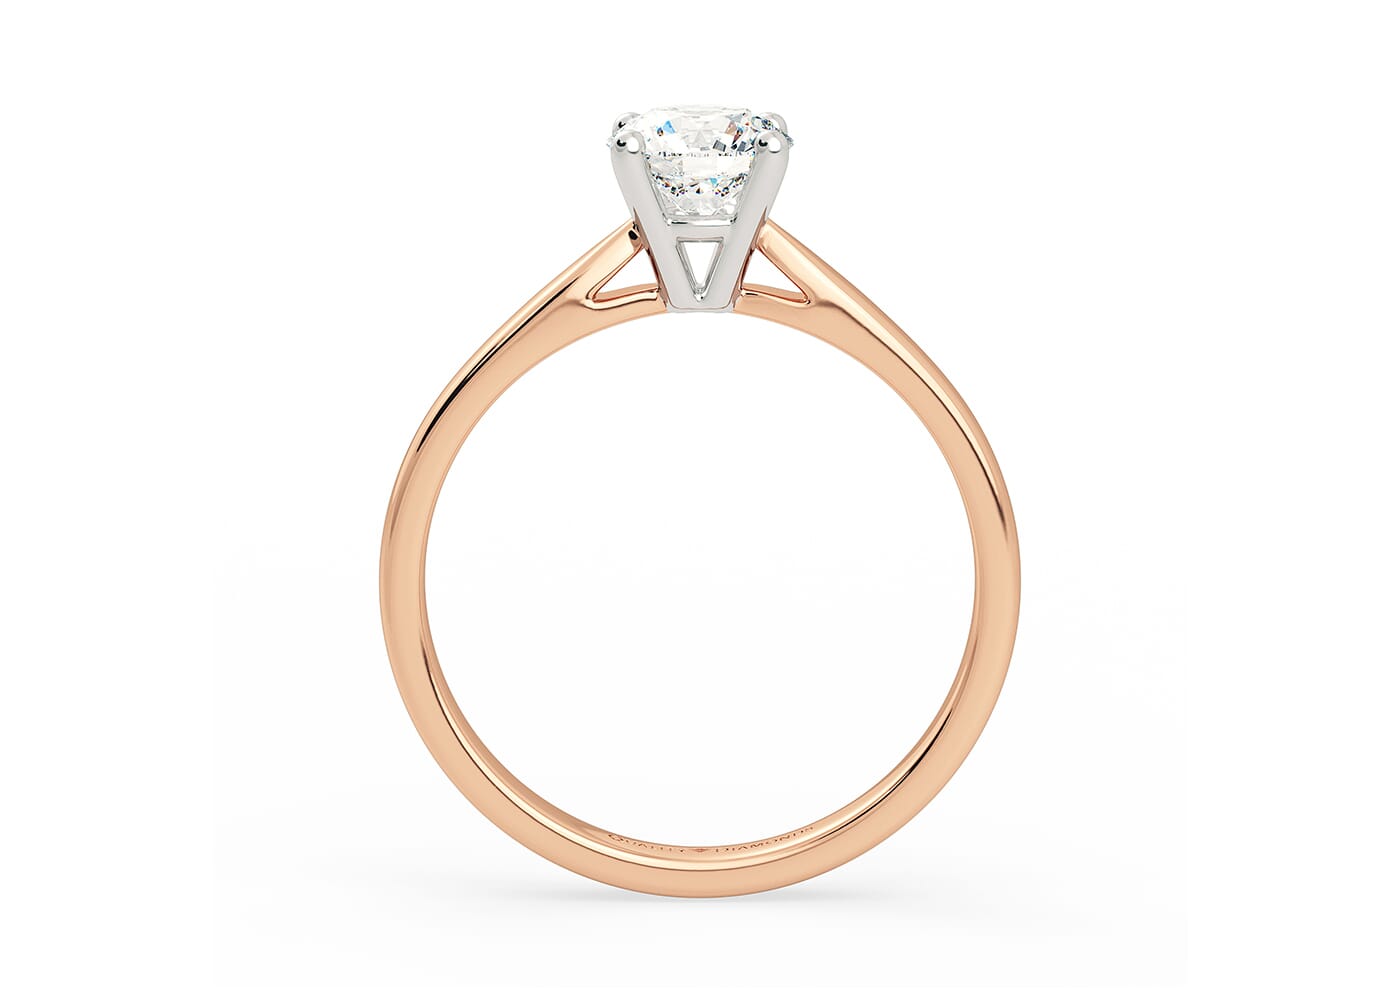  18K Rose Gold Diamond Engagement Ring